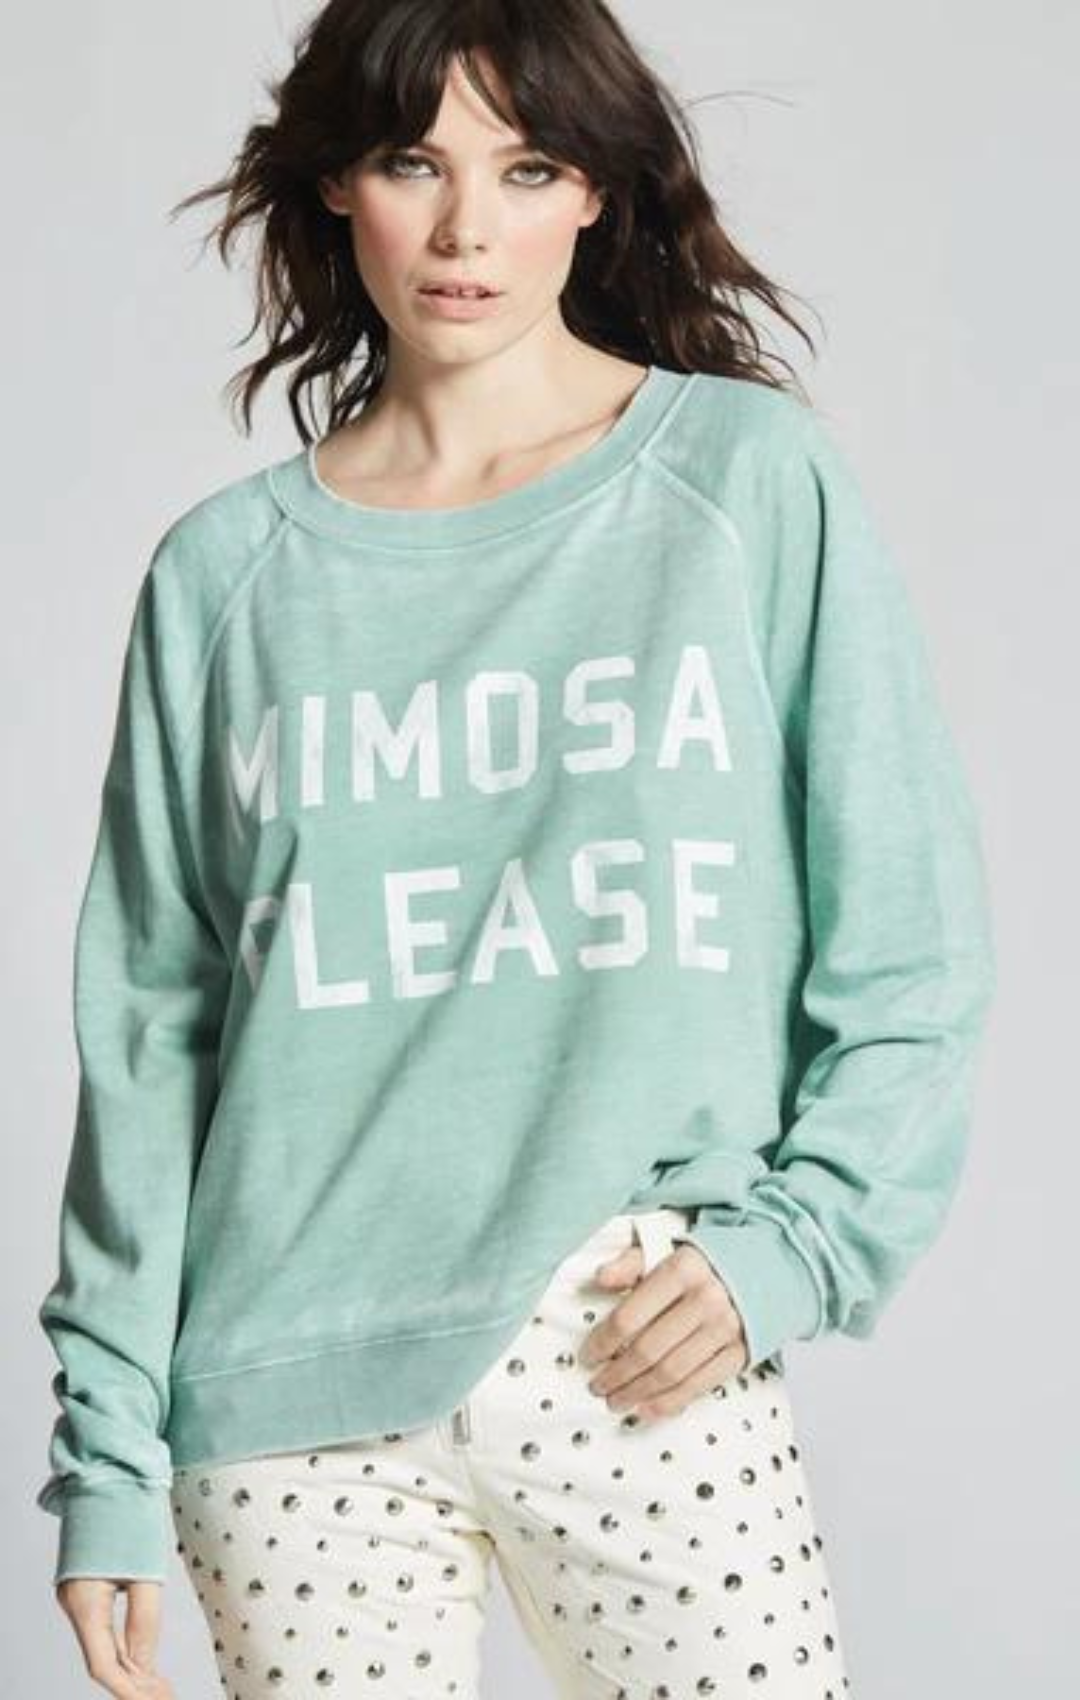 Mimosa Please Sweatshirt by Recycled Karma